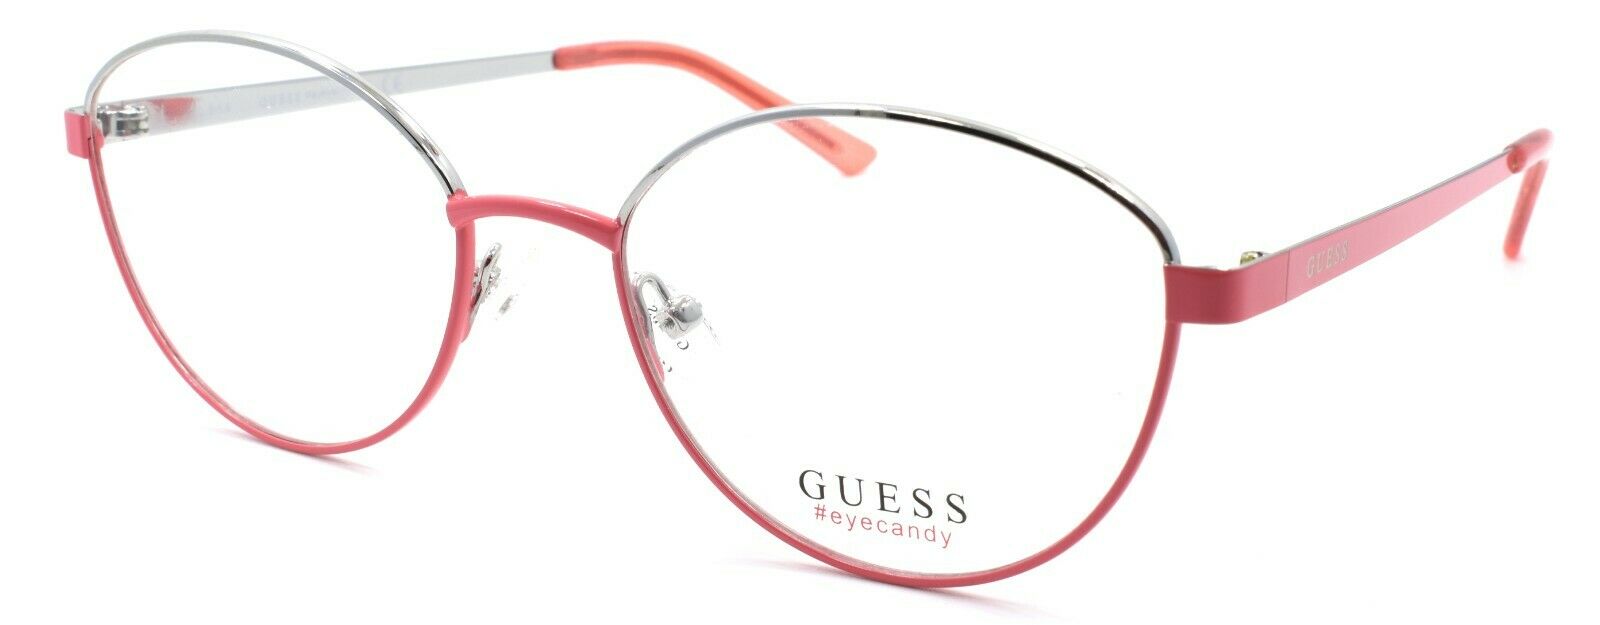 1-GUESS GU3043 072 Eye Candy Women's Eyeglasses Frames 51-17-140 Shiny Pink-889214044624-IKSpecs